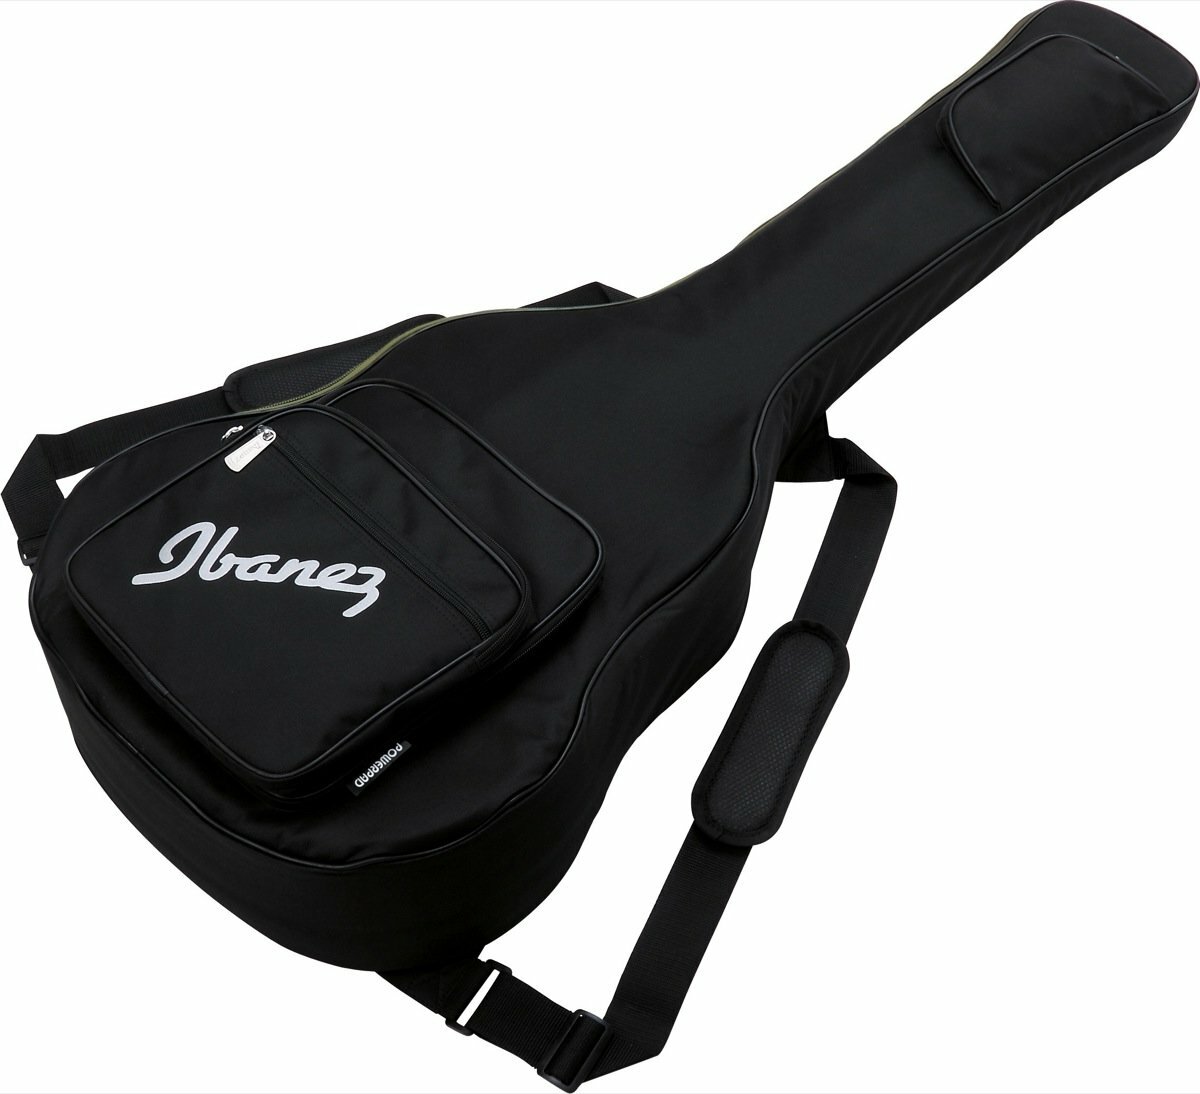 Ibanez Iabb510 Bk Powerpad Acoustic Bass Gig Bag - Tasche für E-bass - Main picture